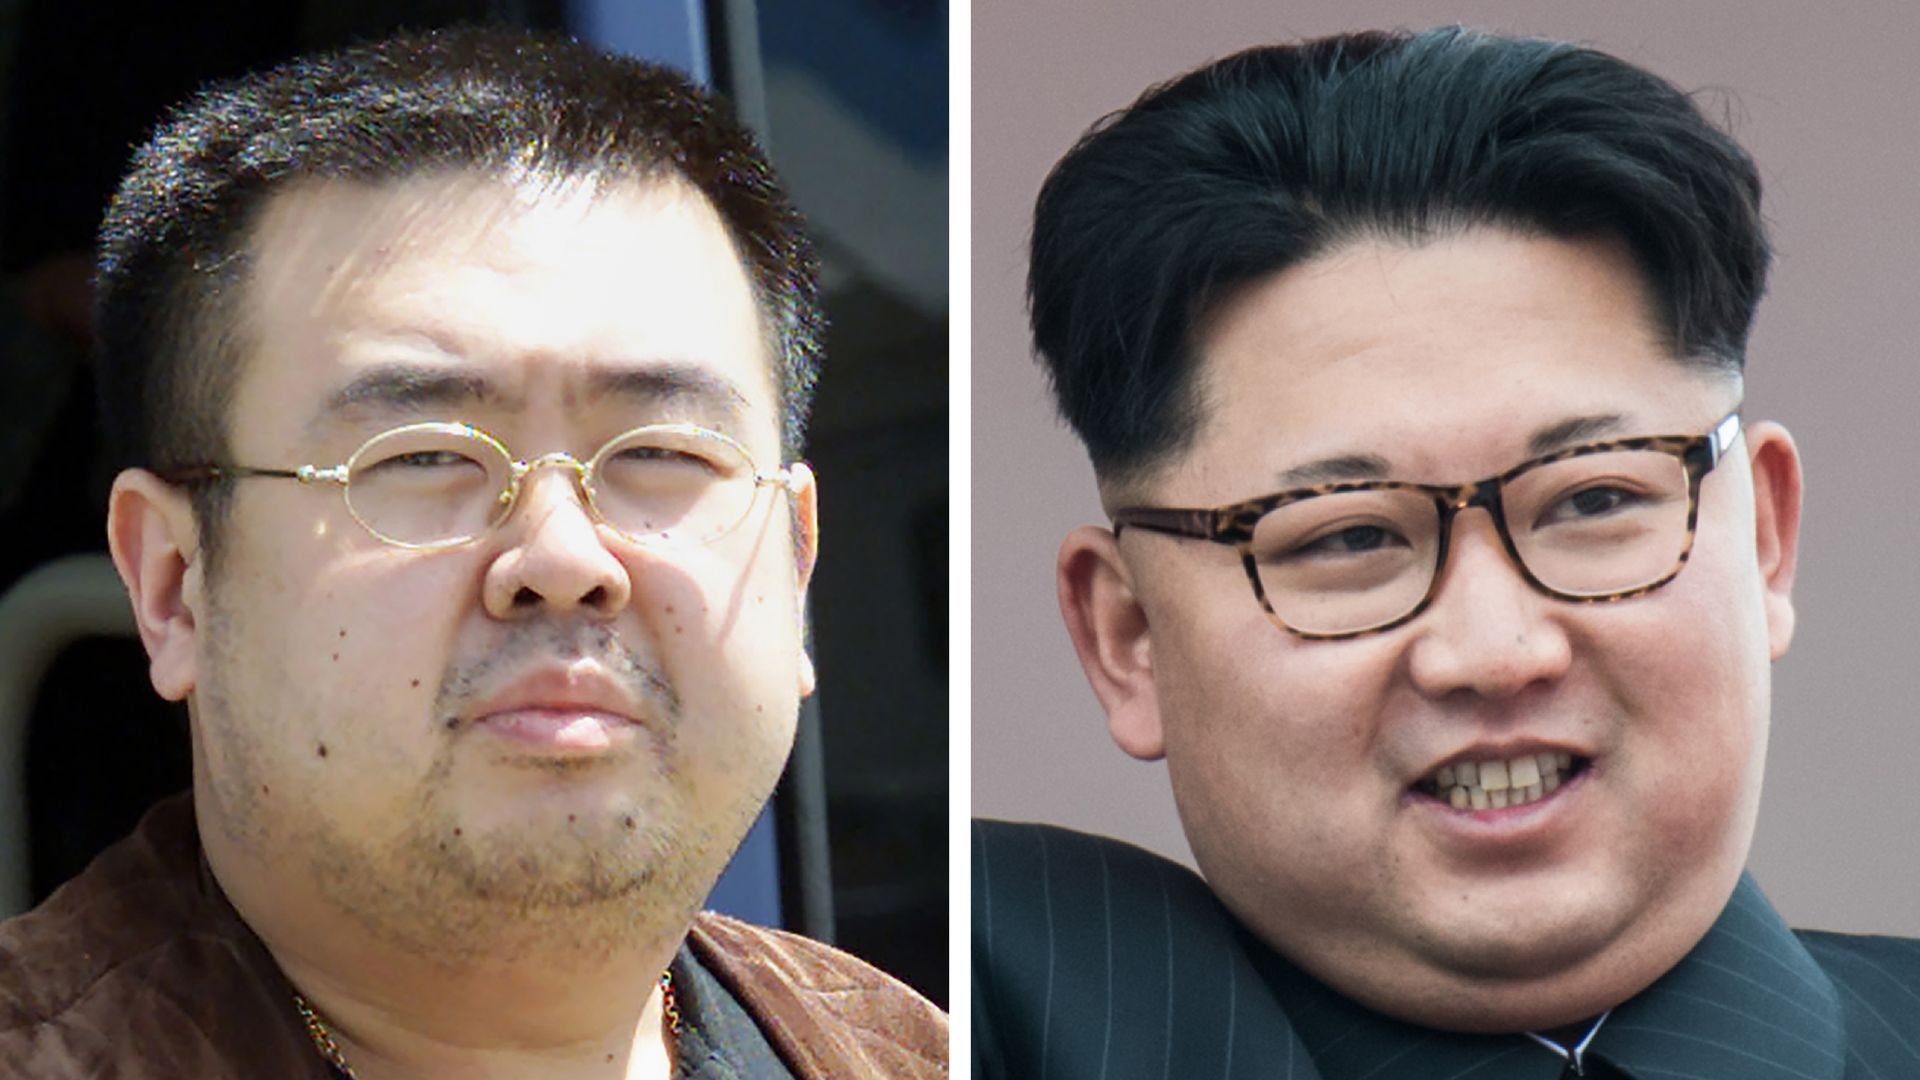 This image is a split screen of Kim Jong Nam and his brother, Kim Jong-un